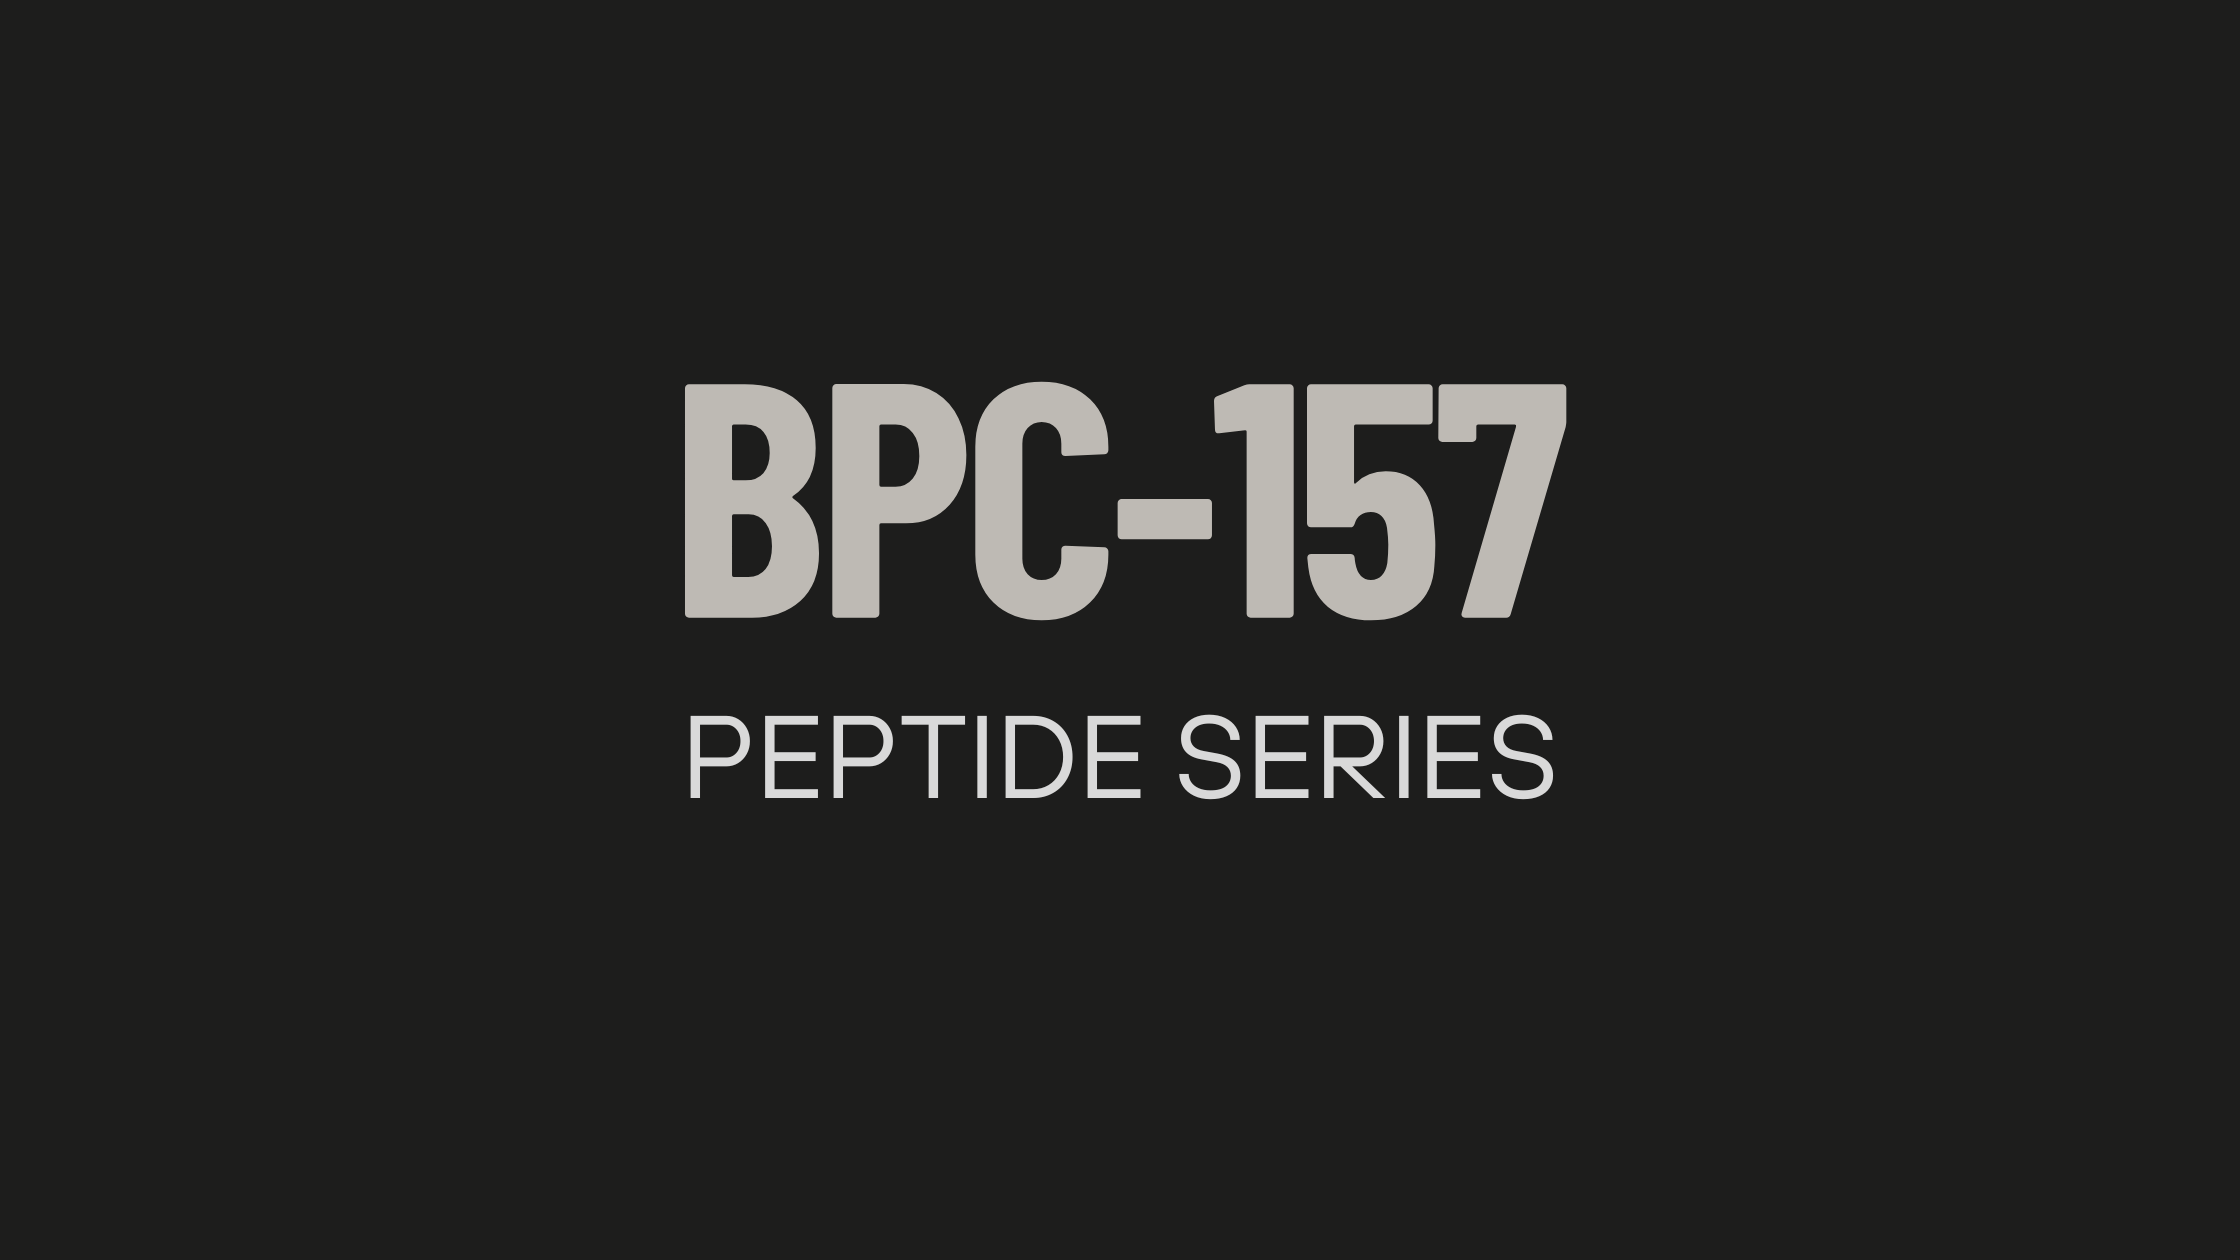 bpc-157 peptide